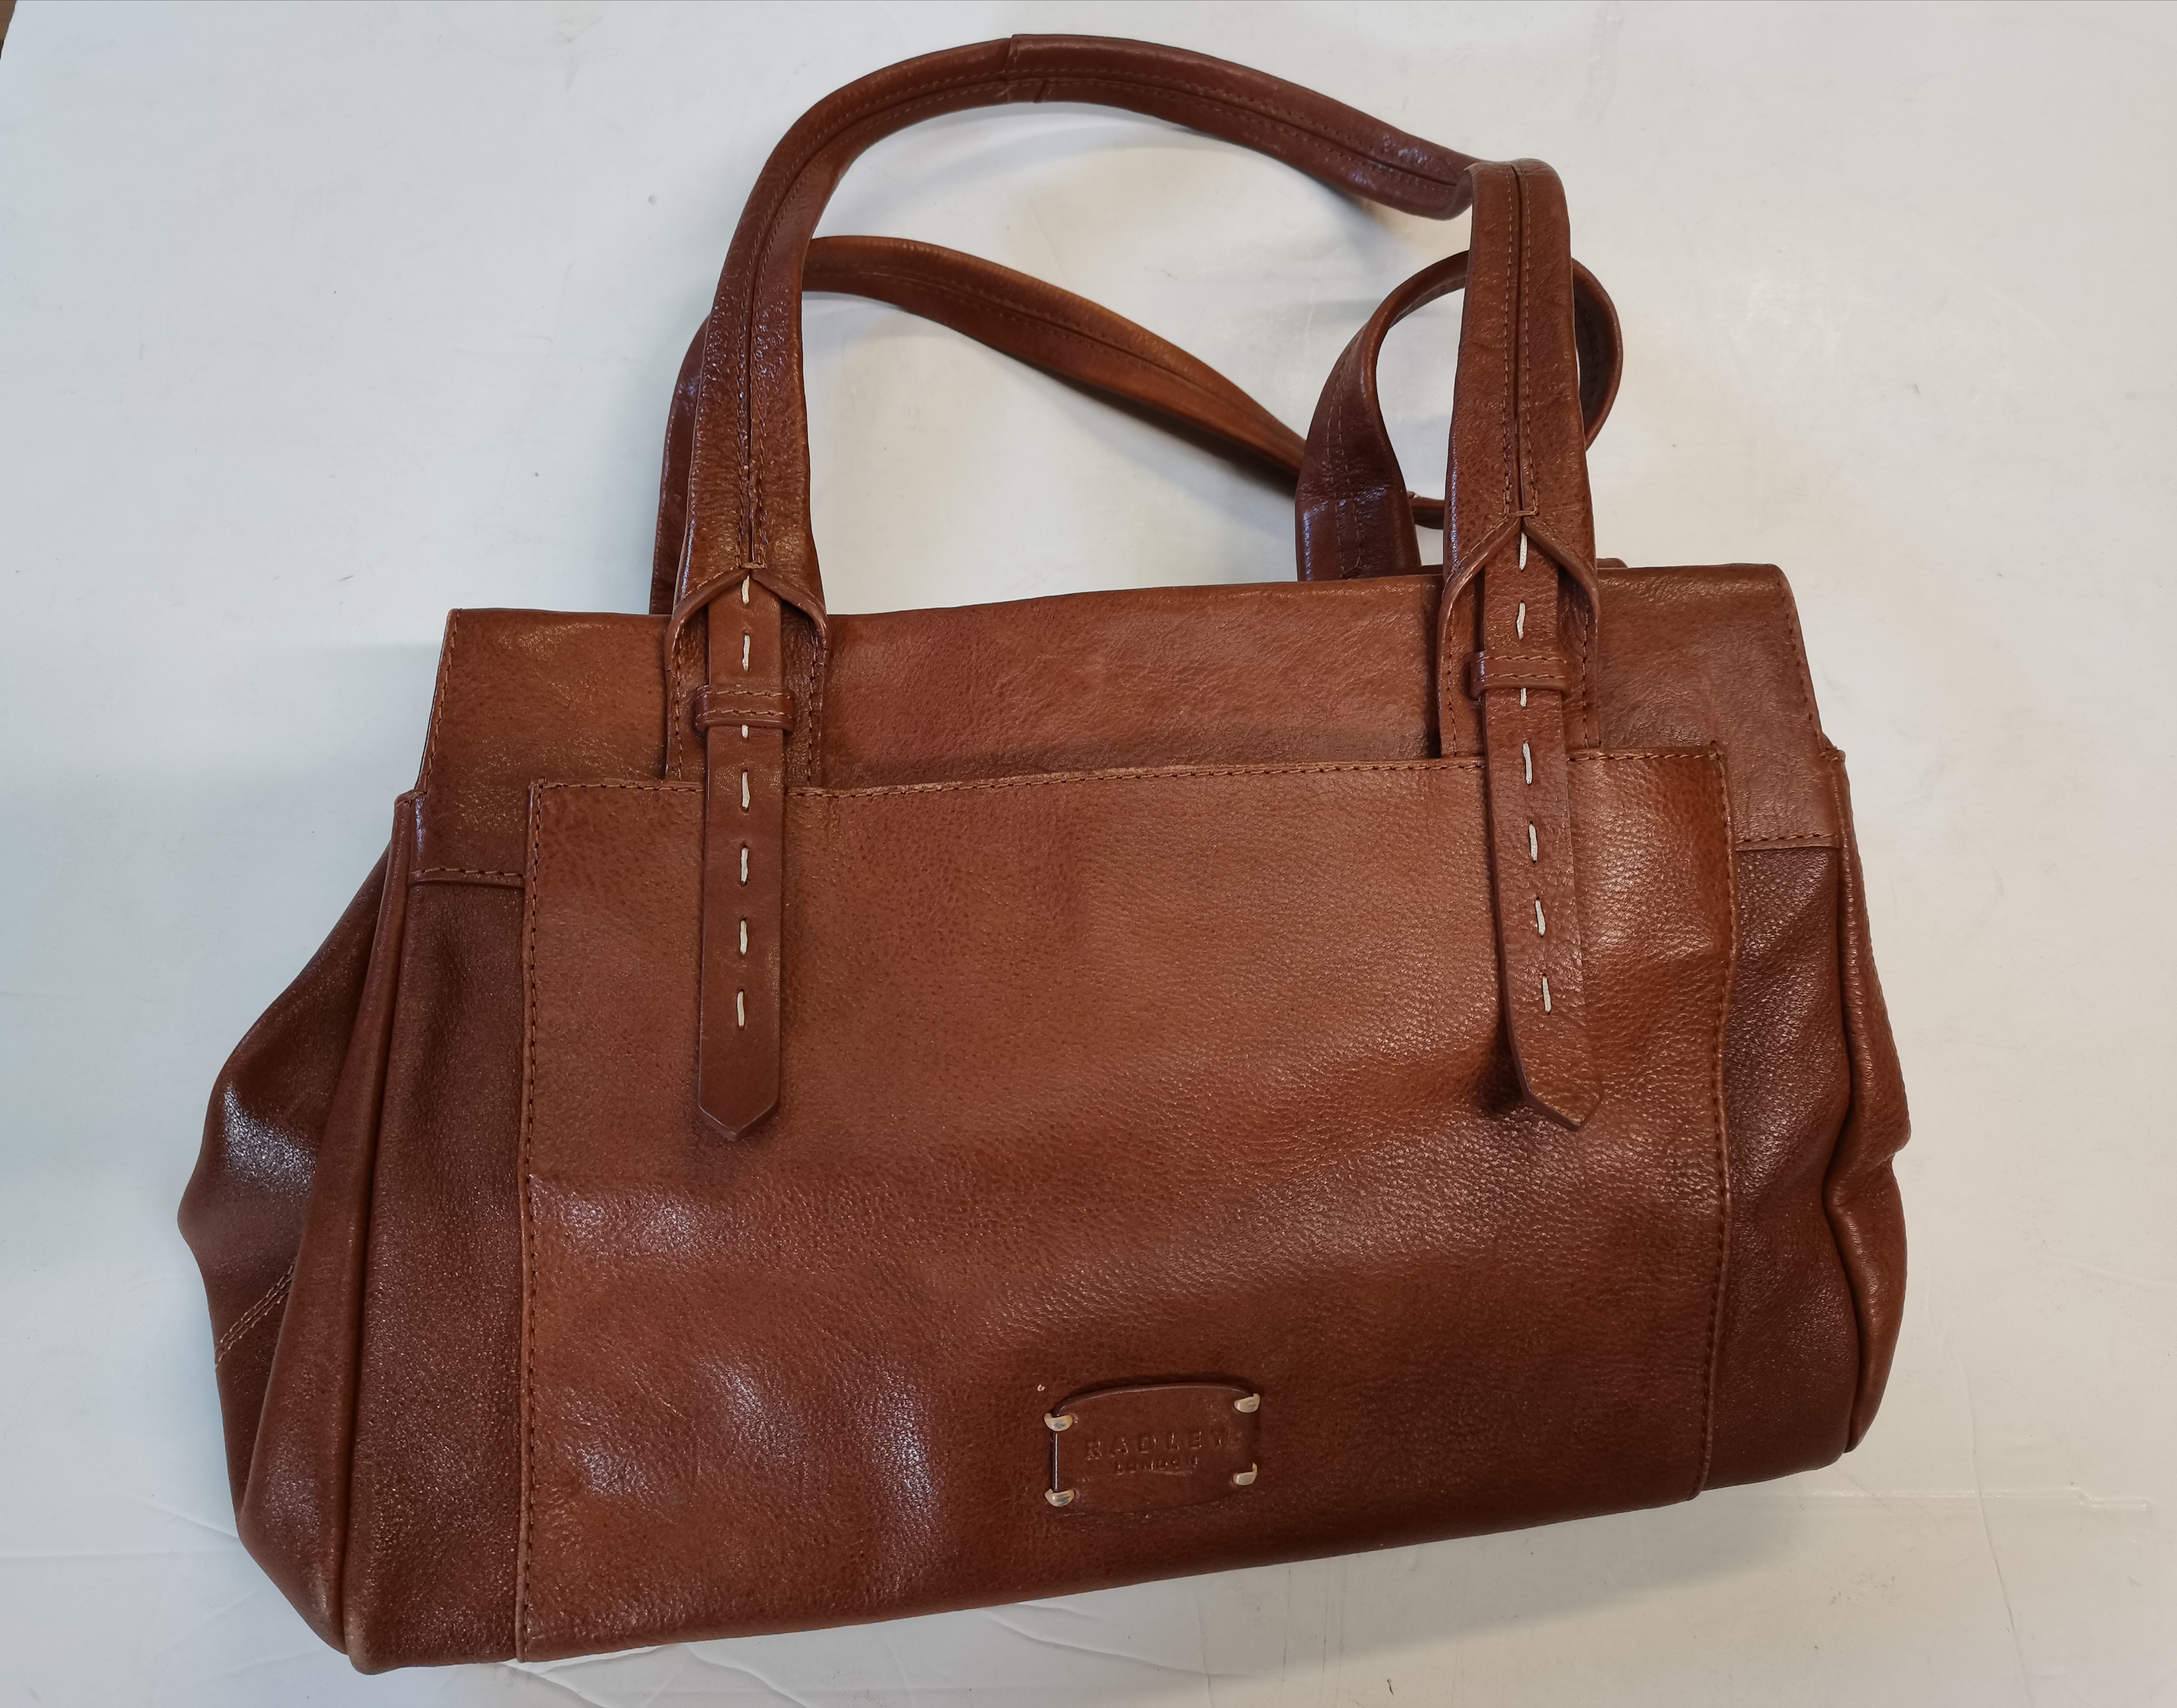 Brown Radley handbag with dust cover, slight wear - Image 3 of 3